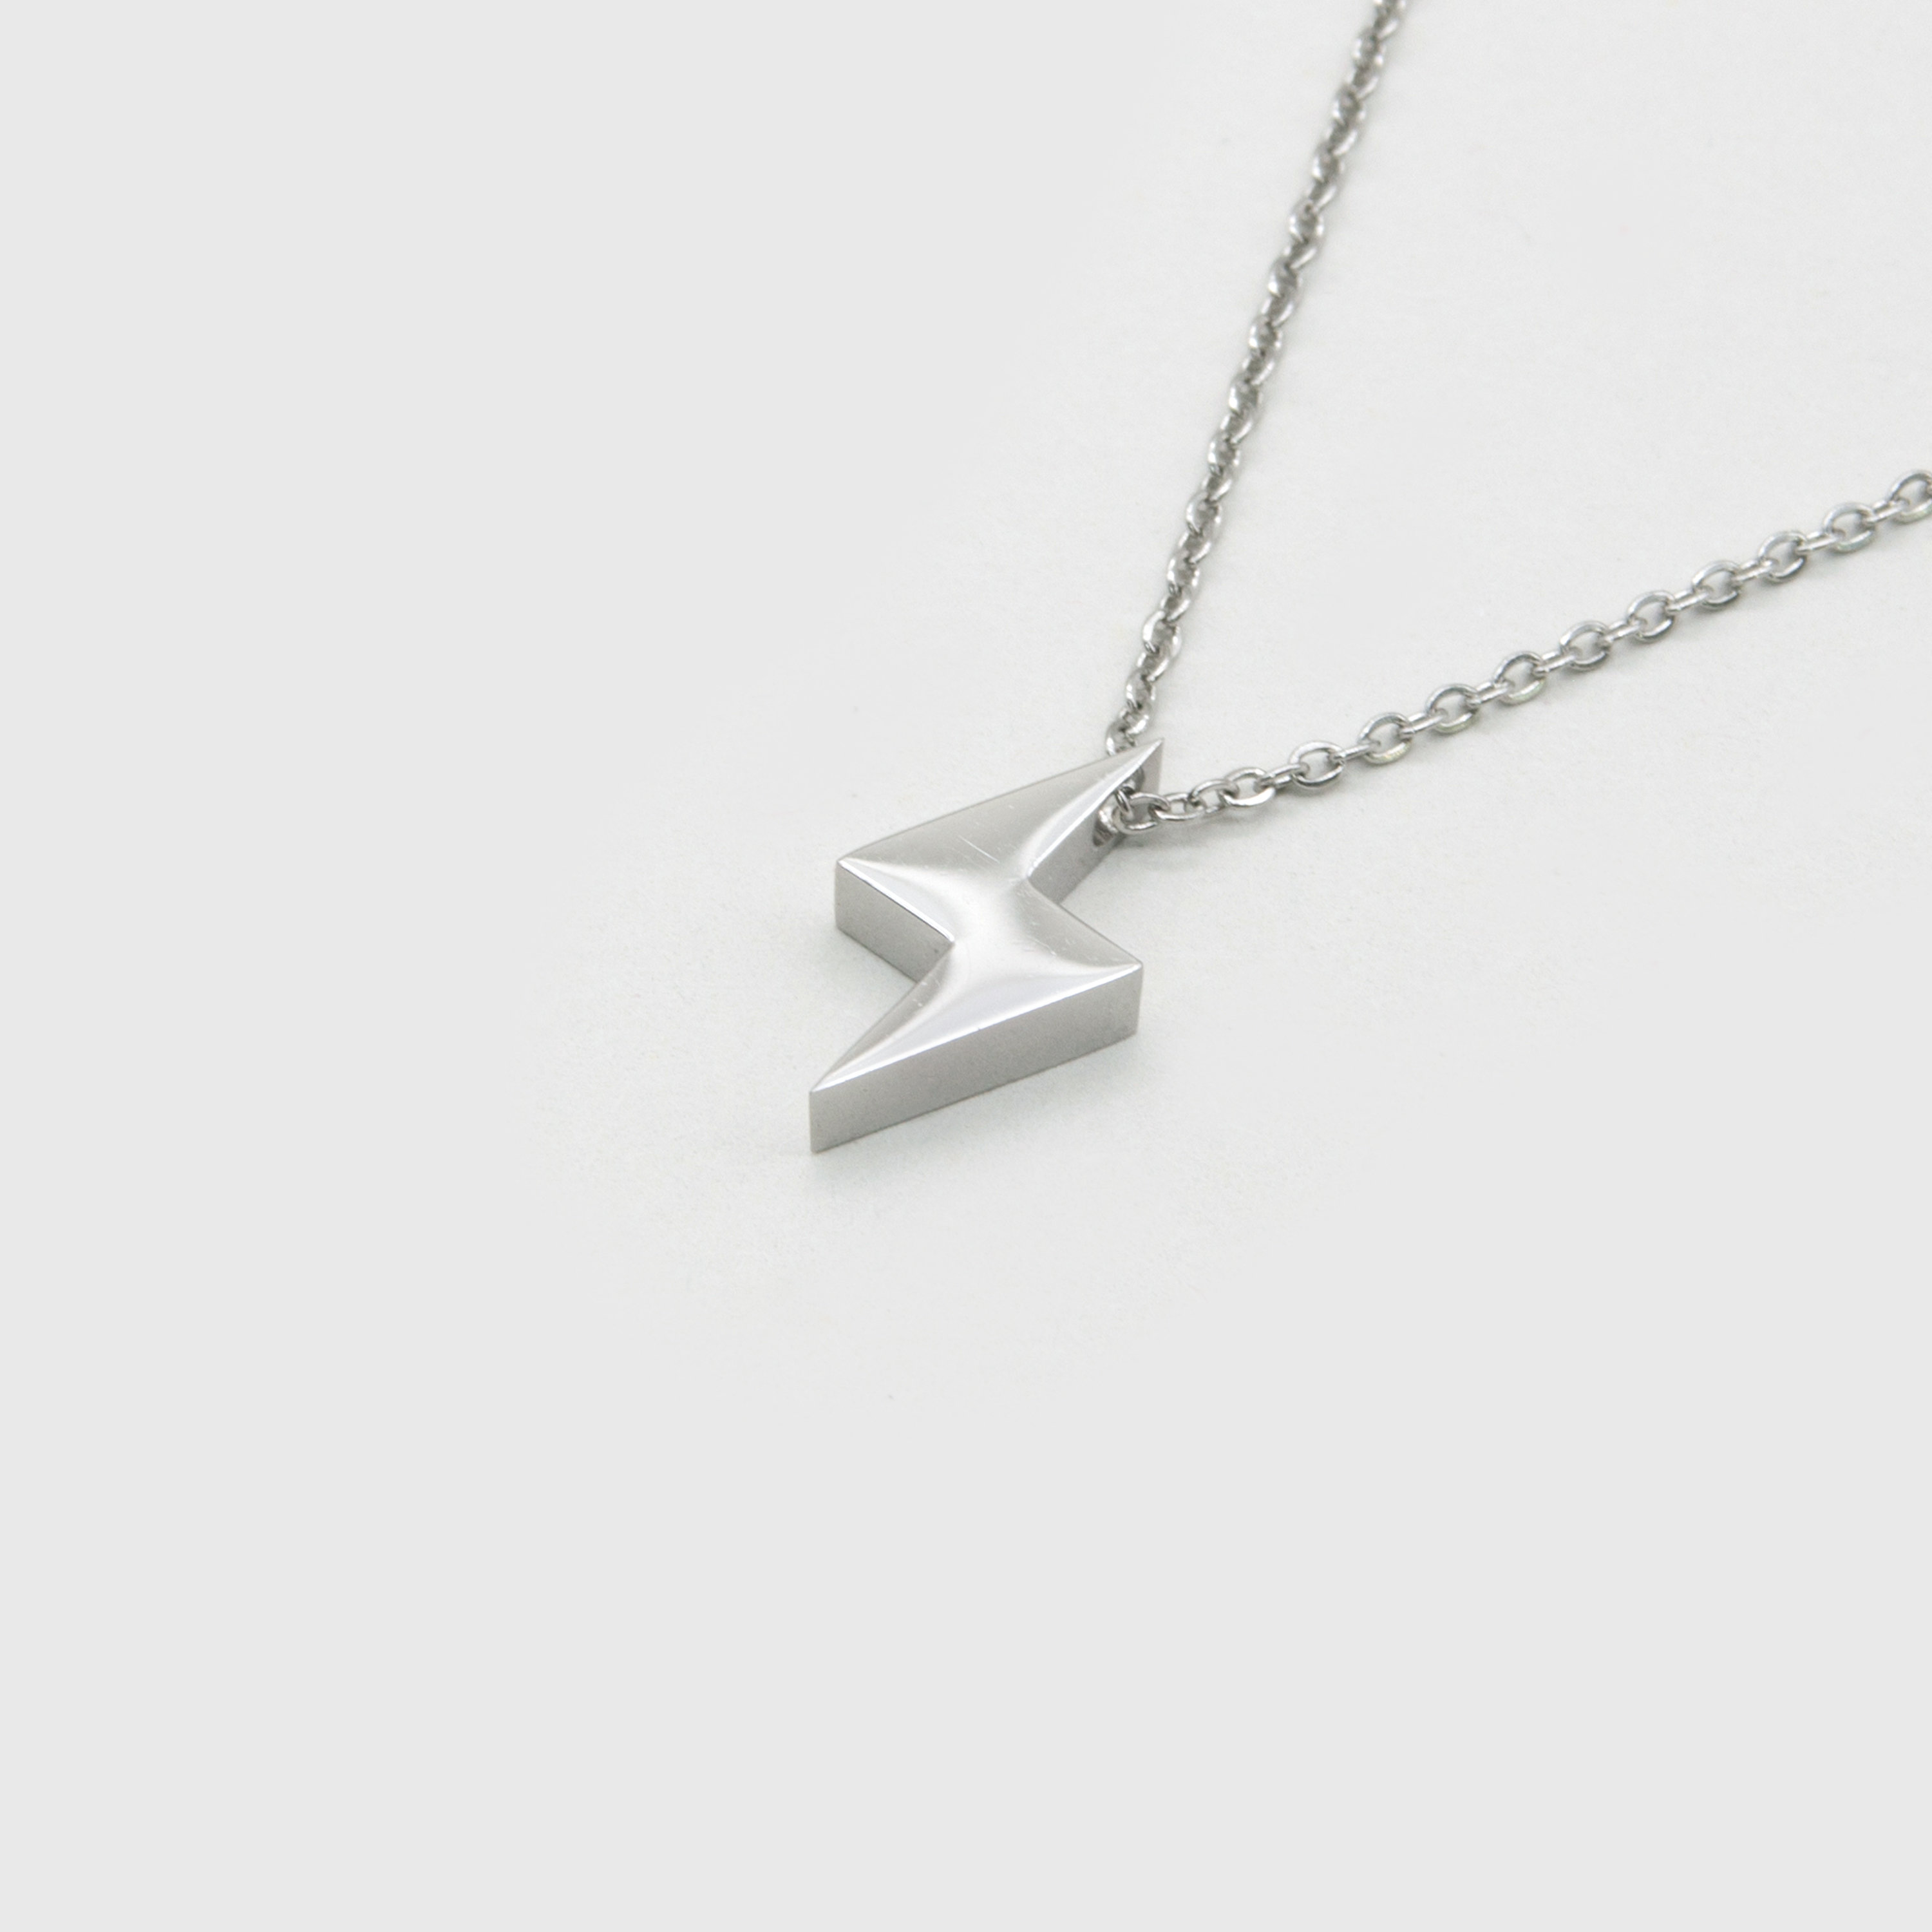 Kuku lightning necklace in silver